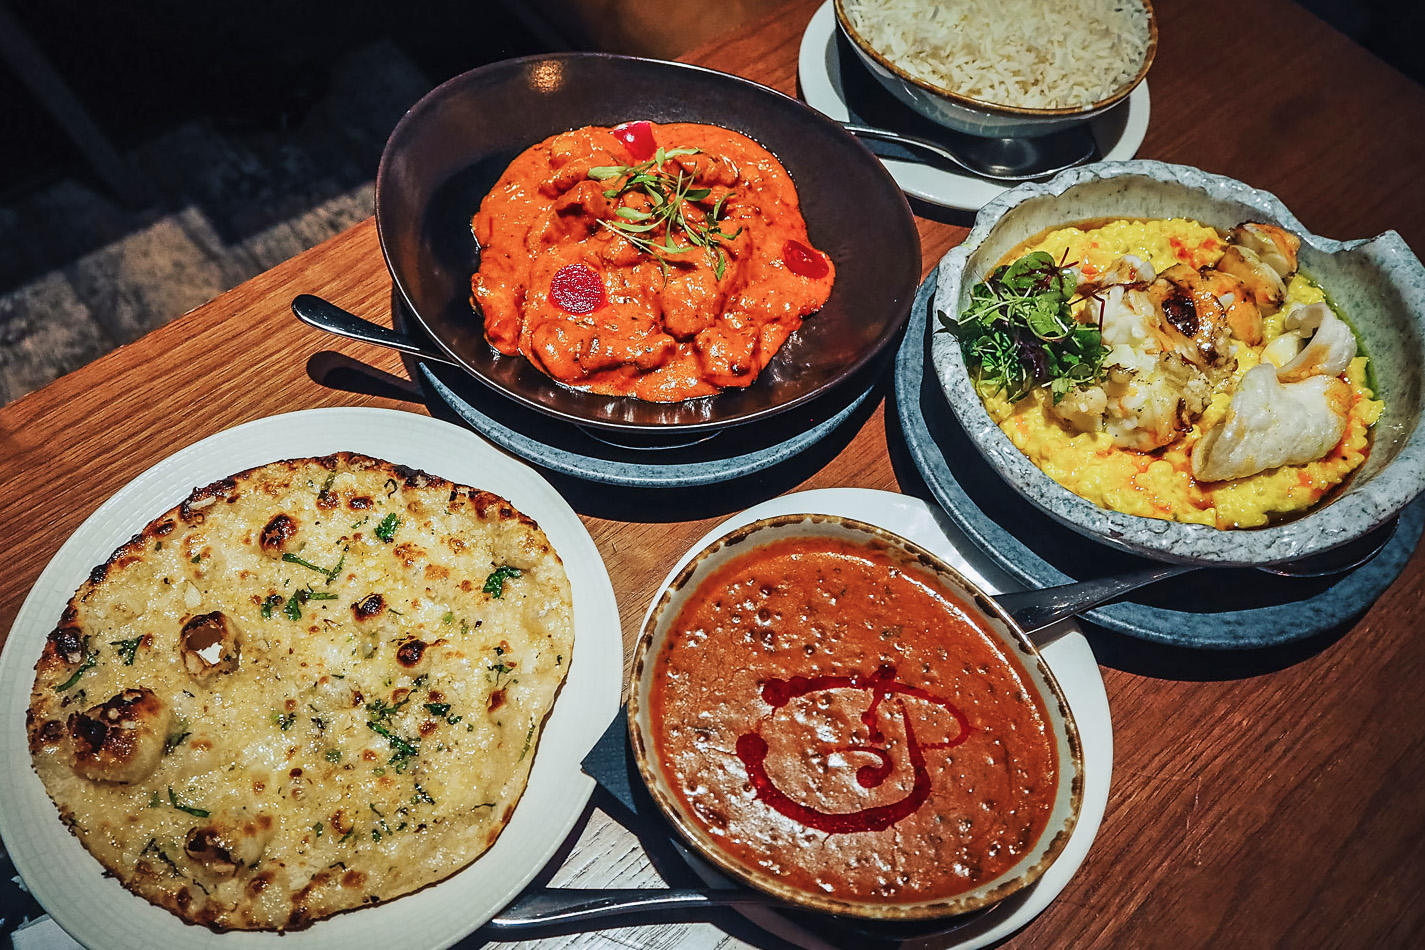 Dinner at Farzi Café, pan-Indian restaurant in London's Haymarket